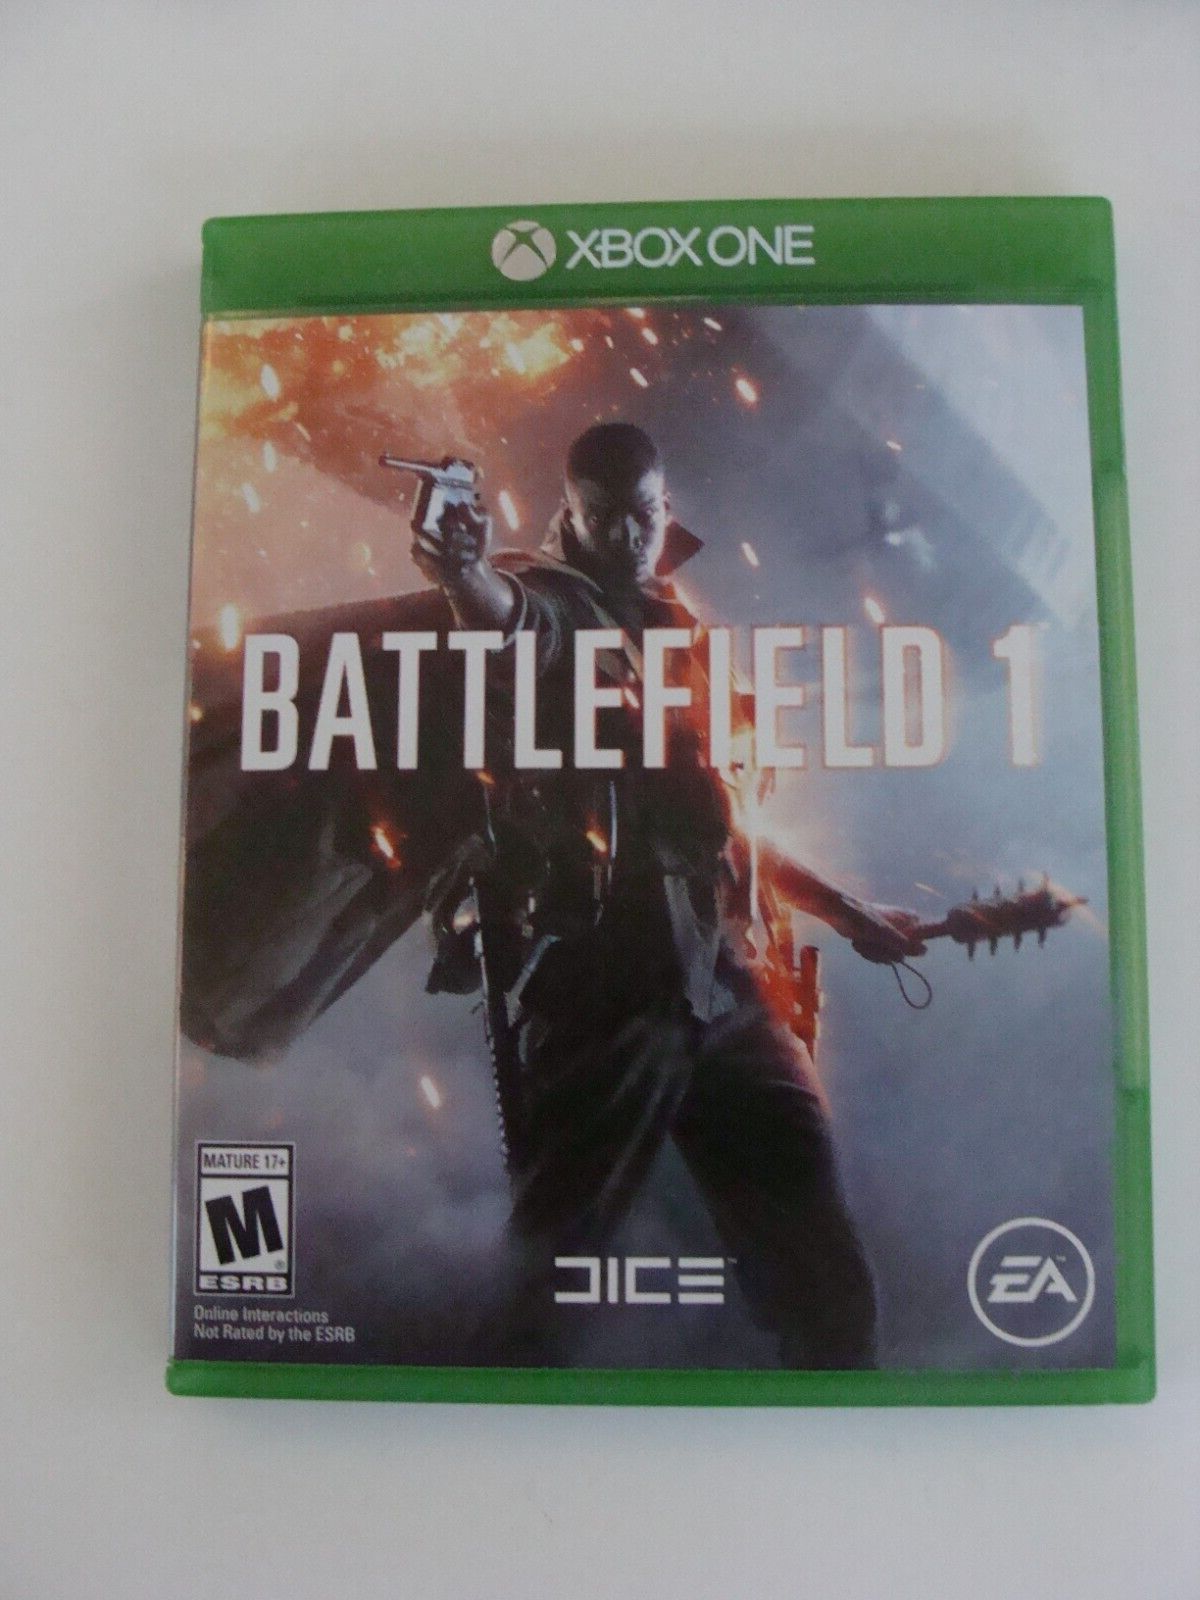 Grit Afleiding Leraar op school Battlefield 1 Xbox One (2016) X BOX 1 Complete w Manual in Orig Box Rated M  14633368659 | eBay